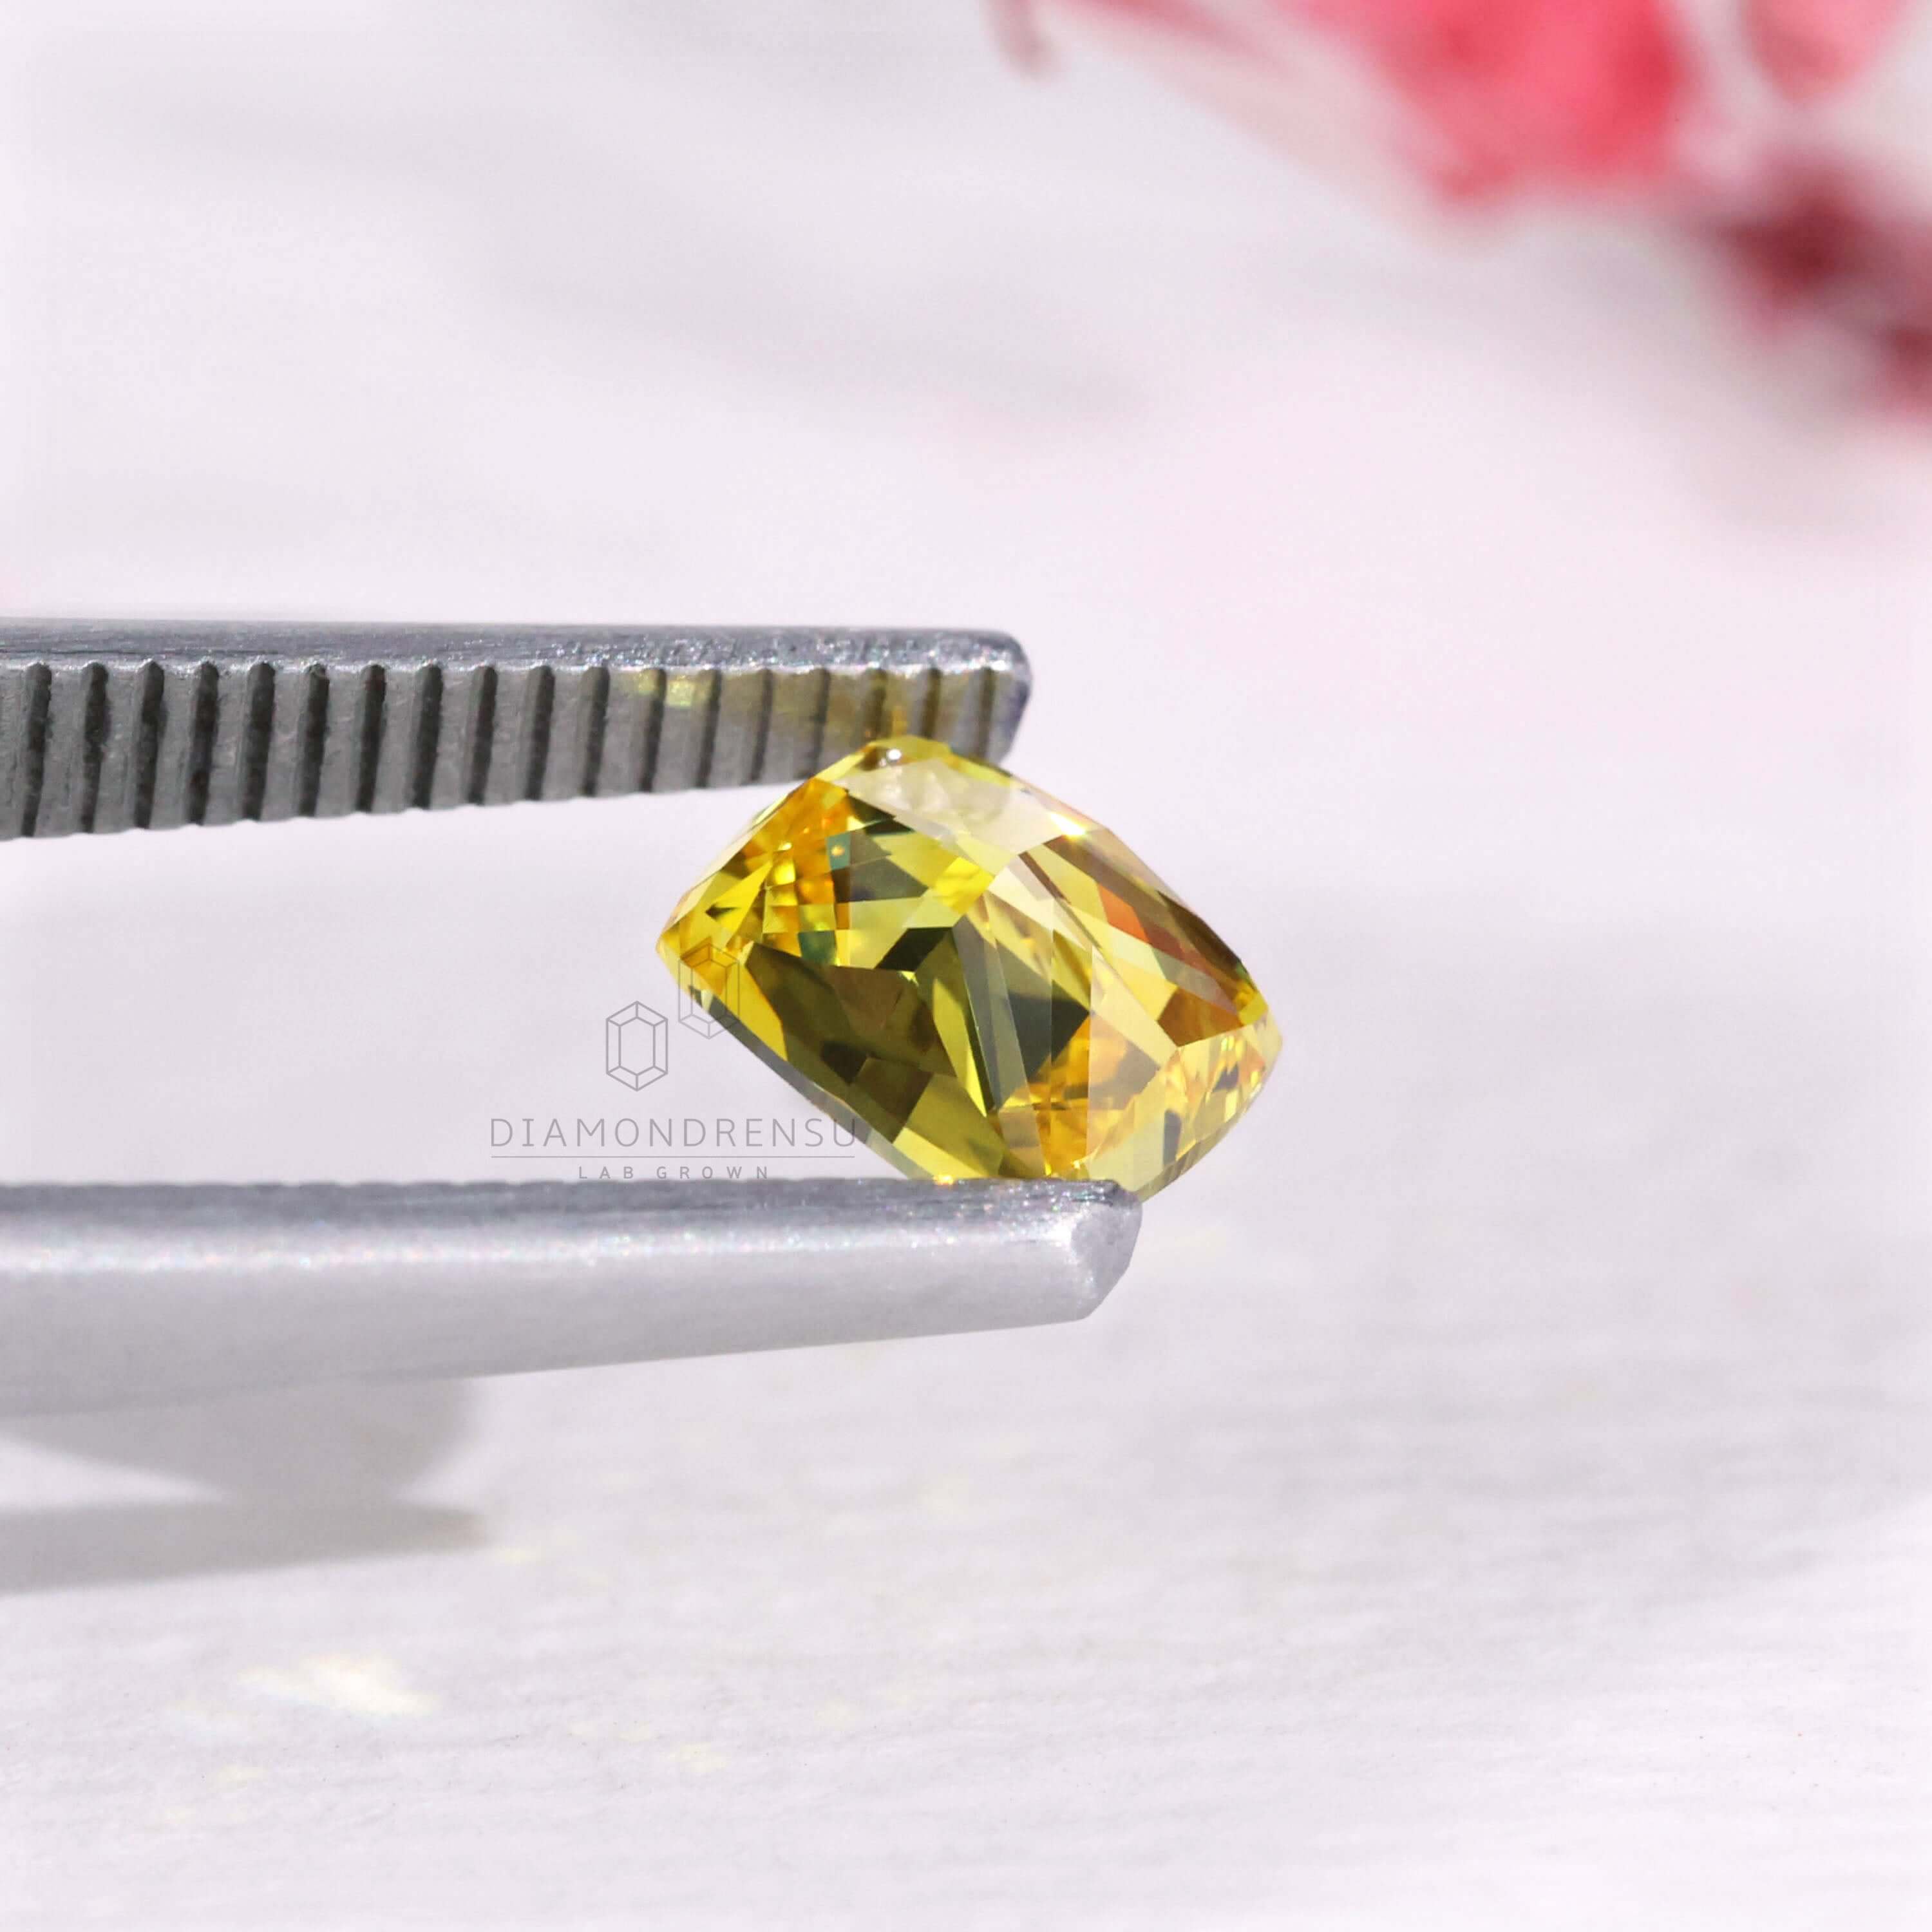 lab created diamonds - diamondrensu